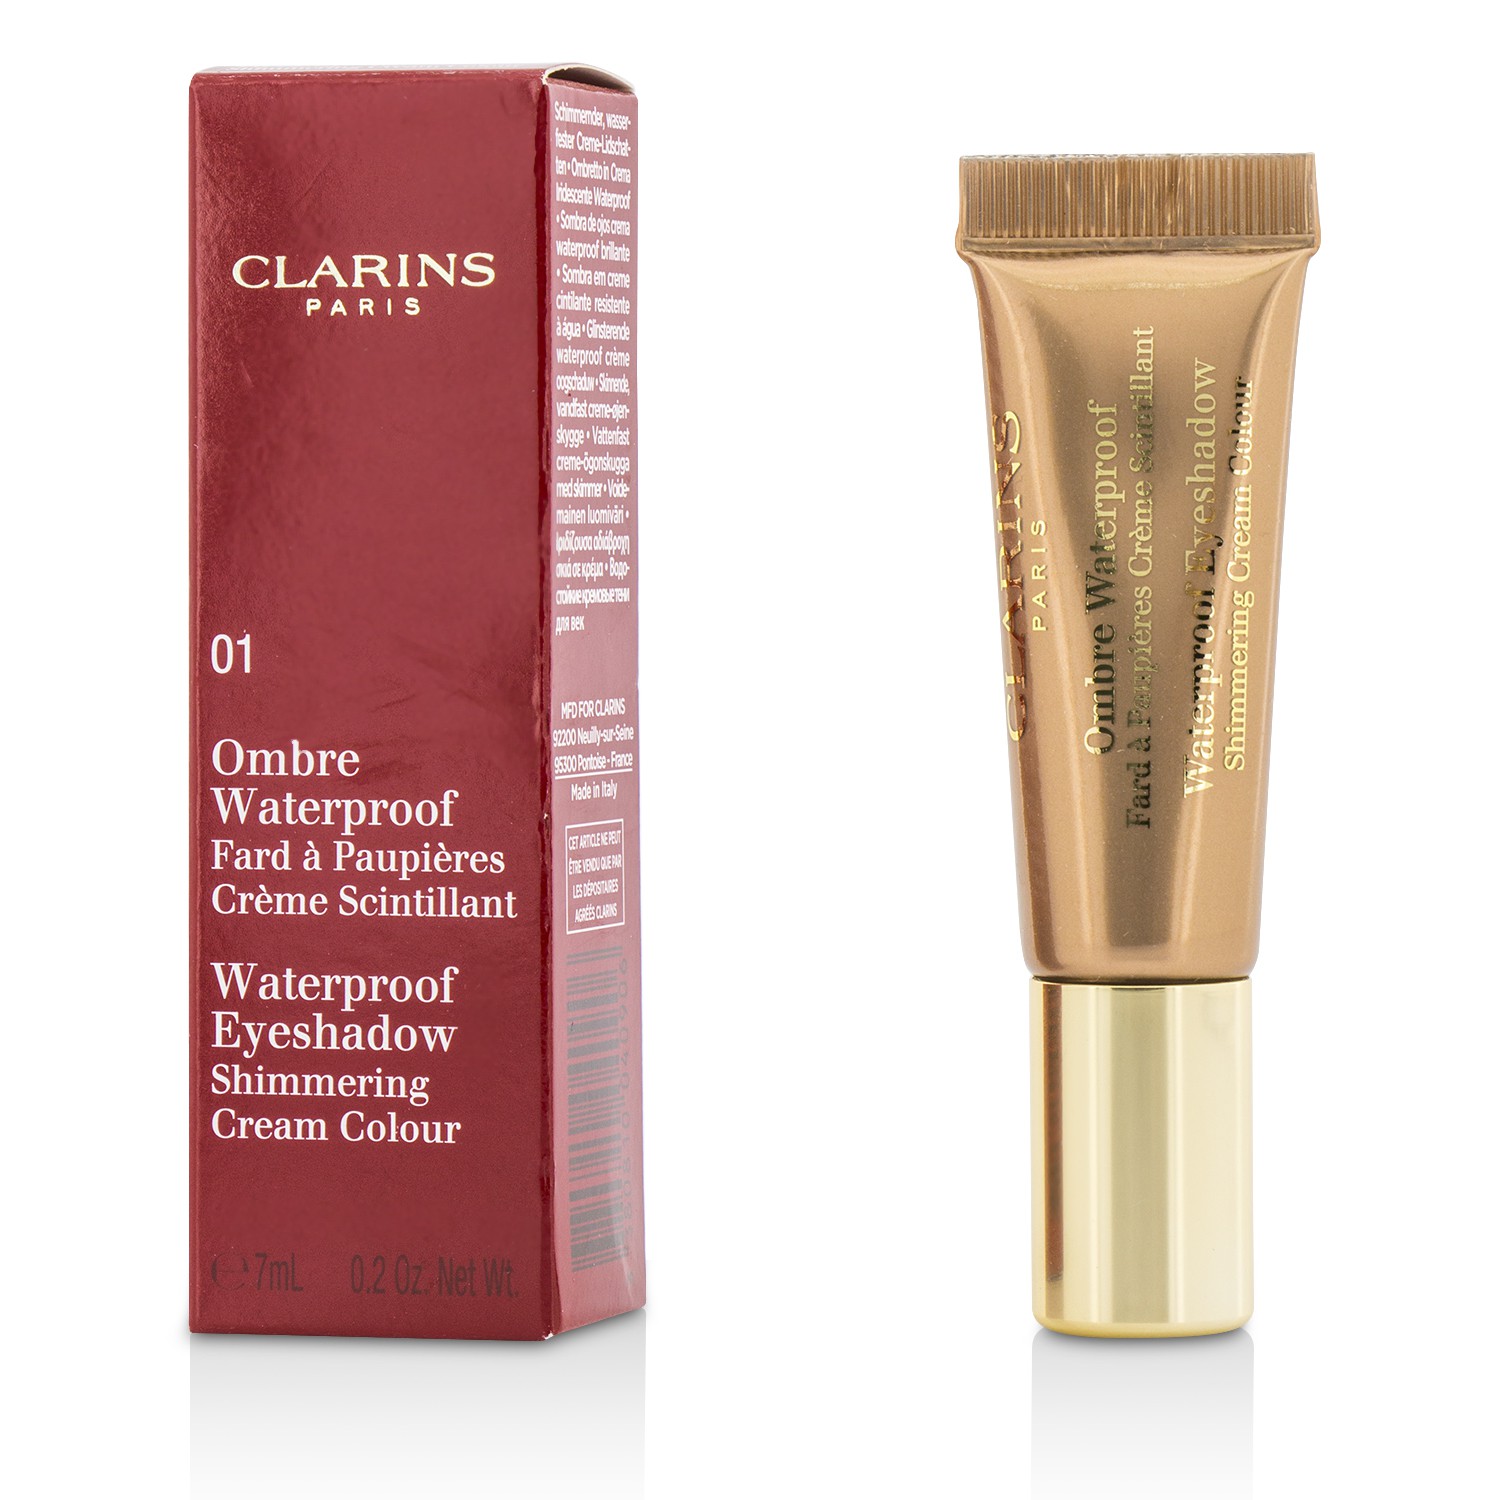 Ombre Waterproof Eyeshadow Shimmering Cream Colour - #01 Golden Clarins Image